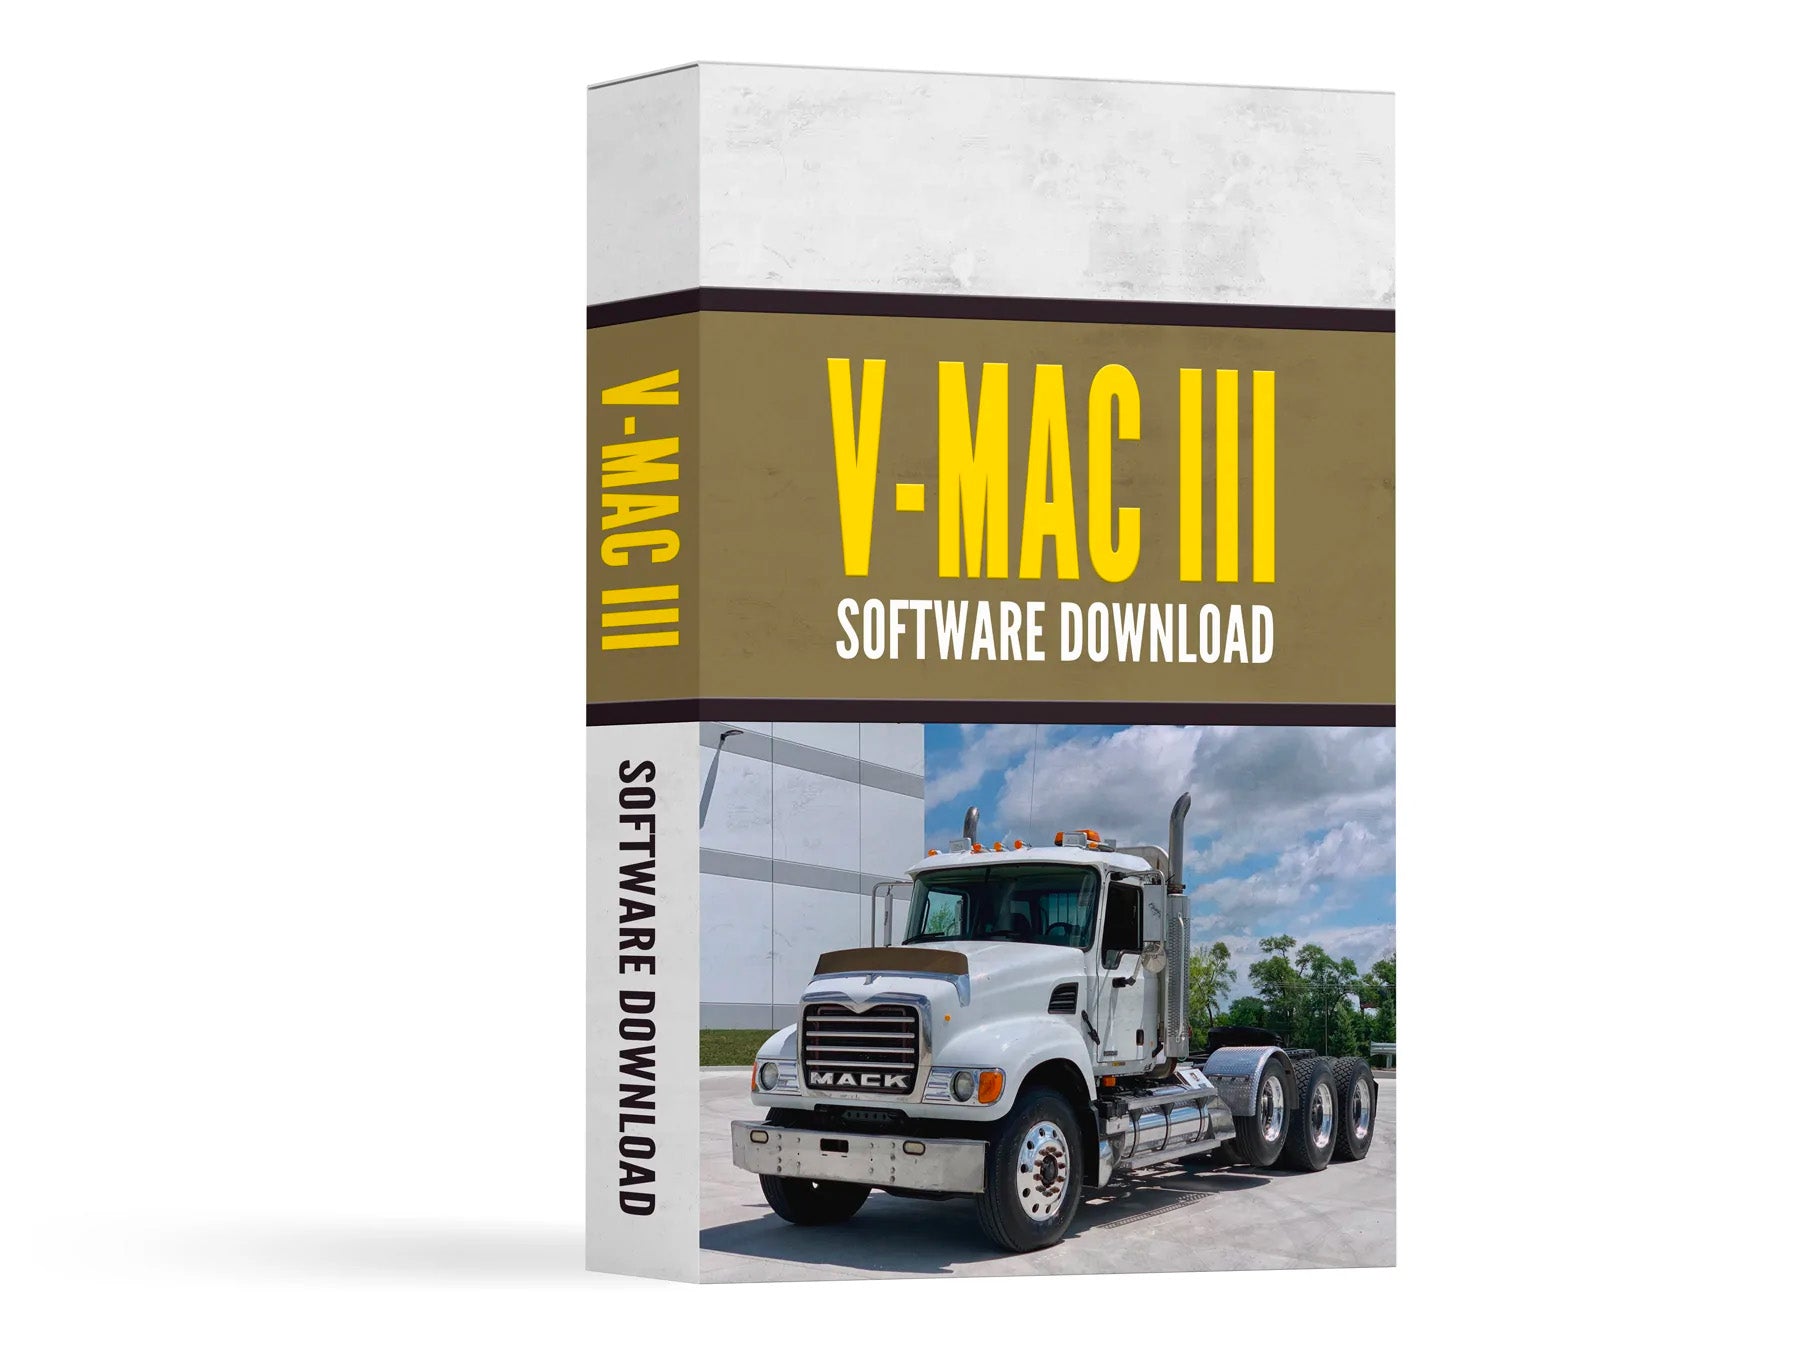 V-MACIII Software